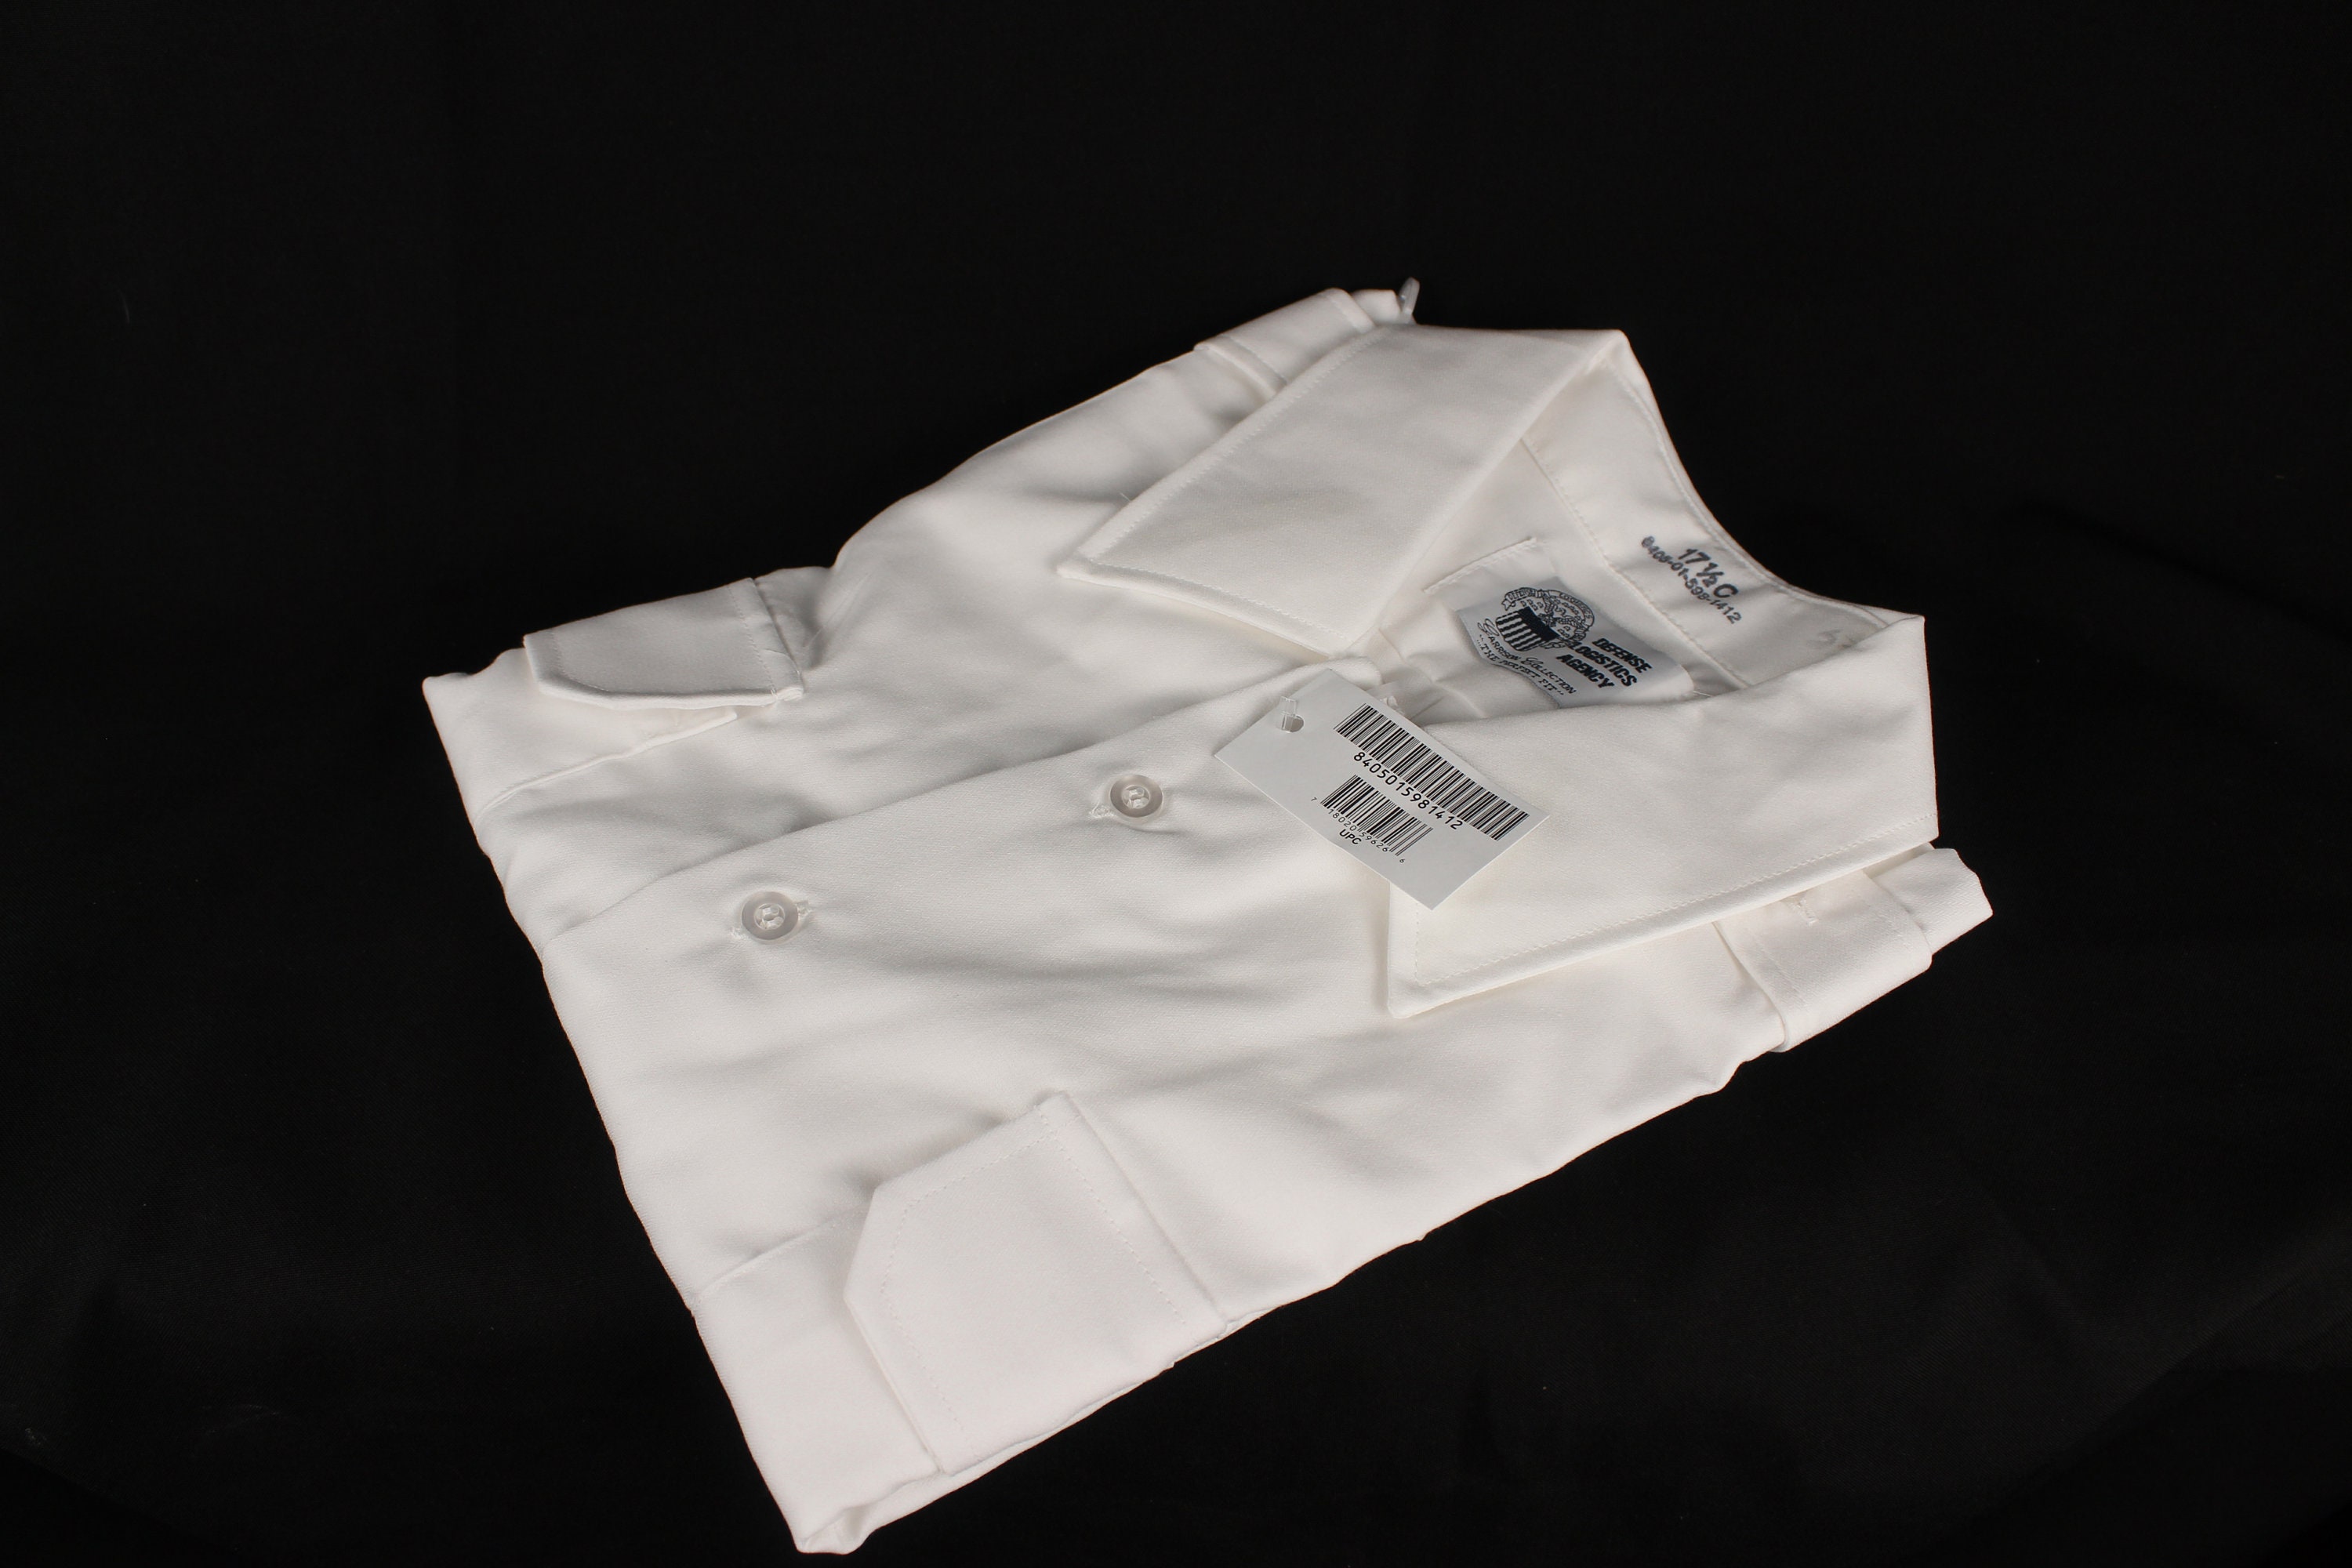 White Shirt, US Army Dress Shirt ASU Size 17.5 32/33 at  Men's  Clothing store